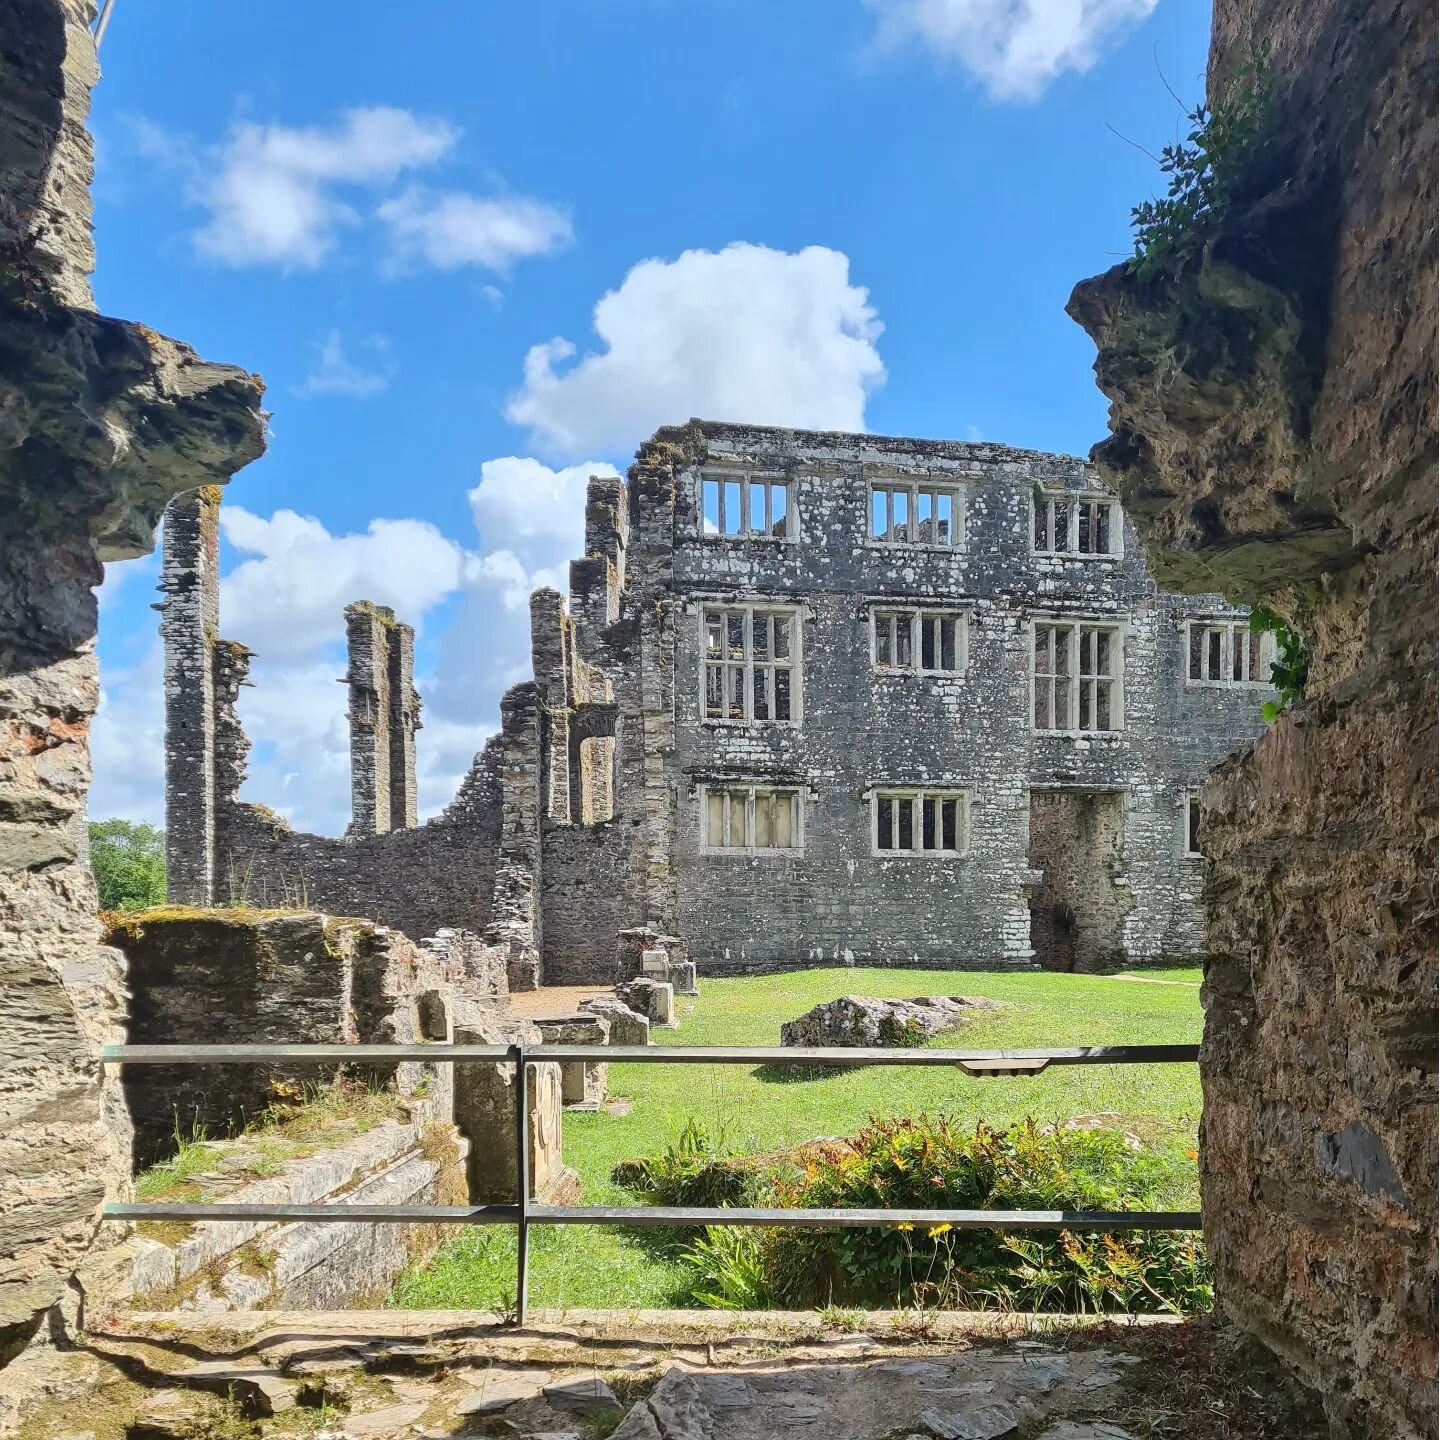 One of my happy places ✨️ Berry Pomeroy, Devon 📍🌎 
#happyplace #ruins #castle #keep #history #england #devon #bluesky #sunshine #daysout #uk #travel